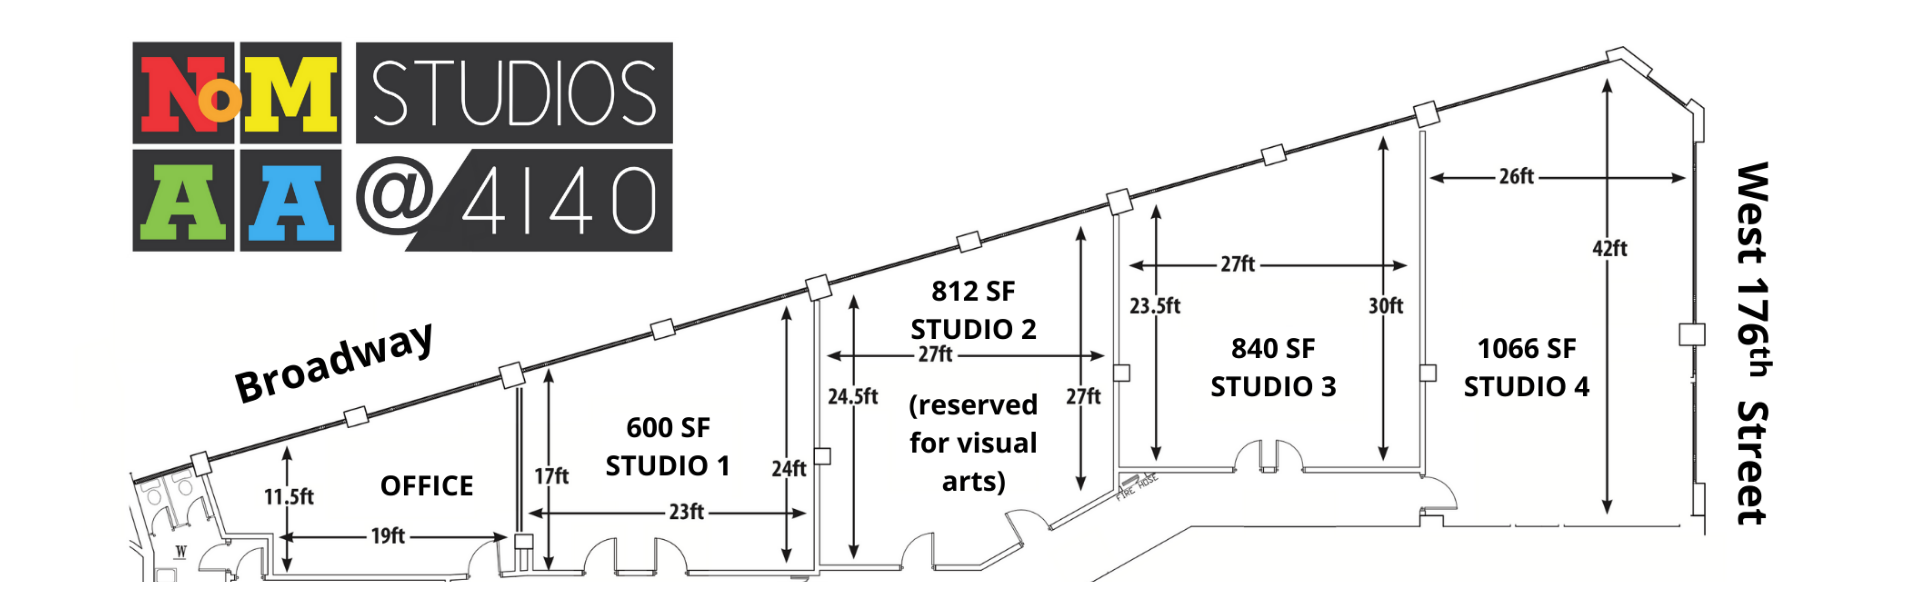 studios-floorplan